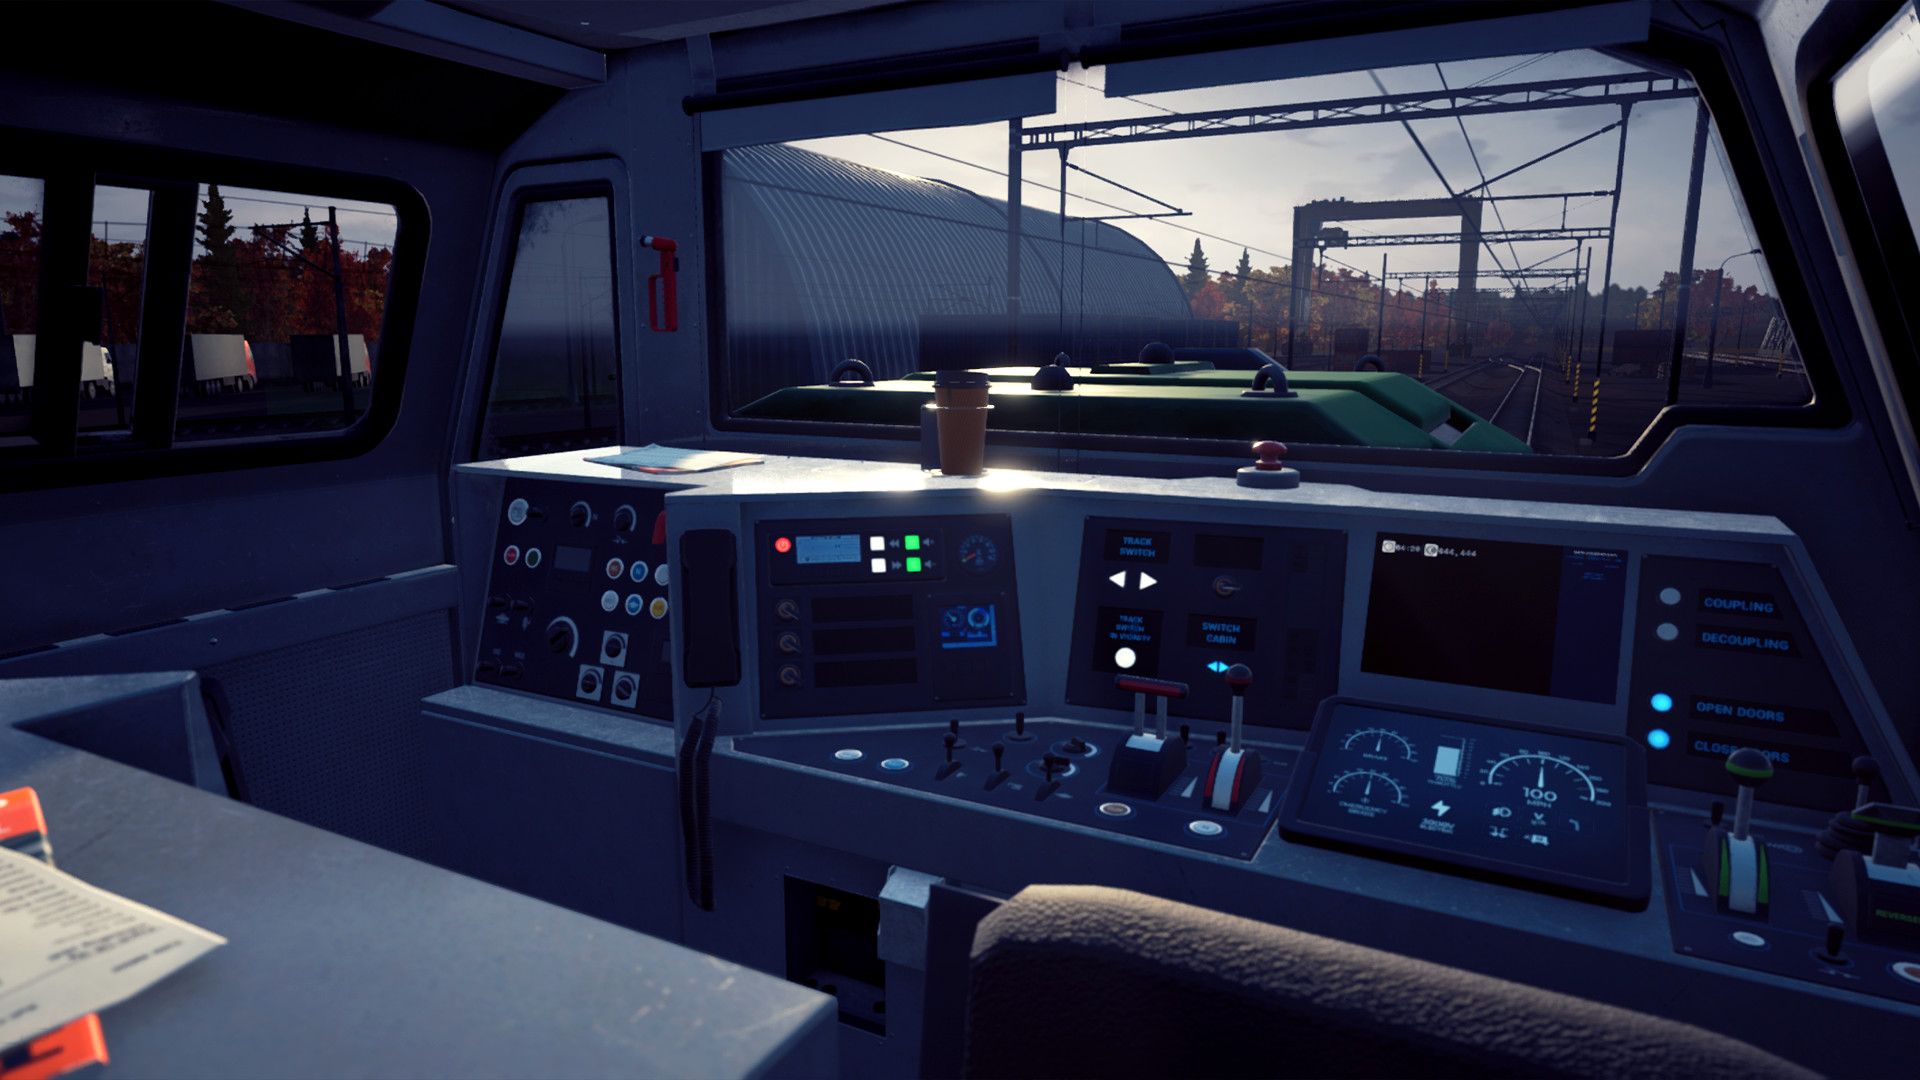 Train Life: A Railway Simulator Steam Account $4.52